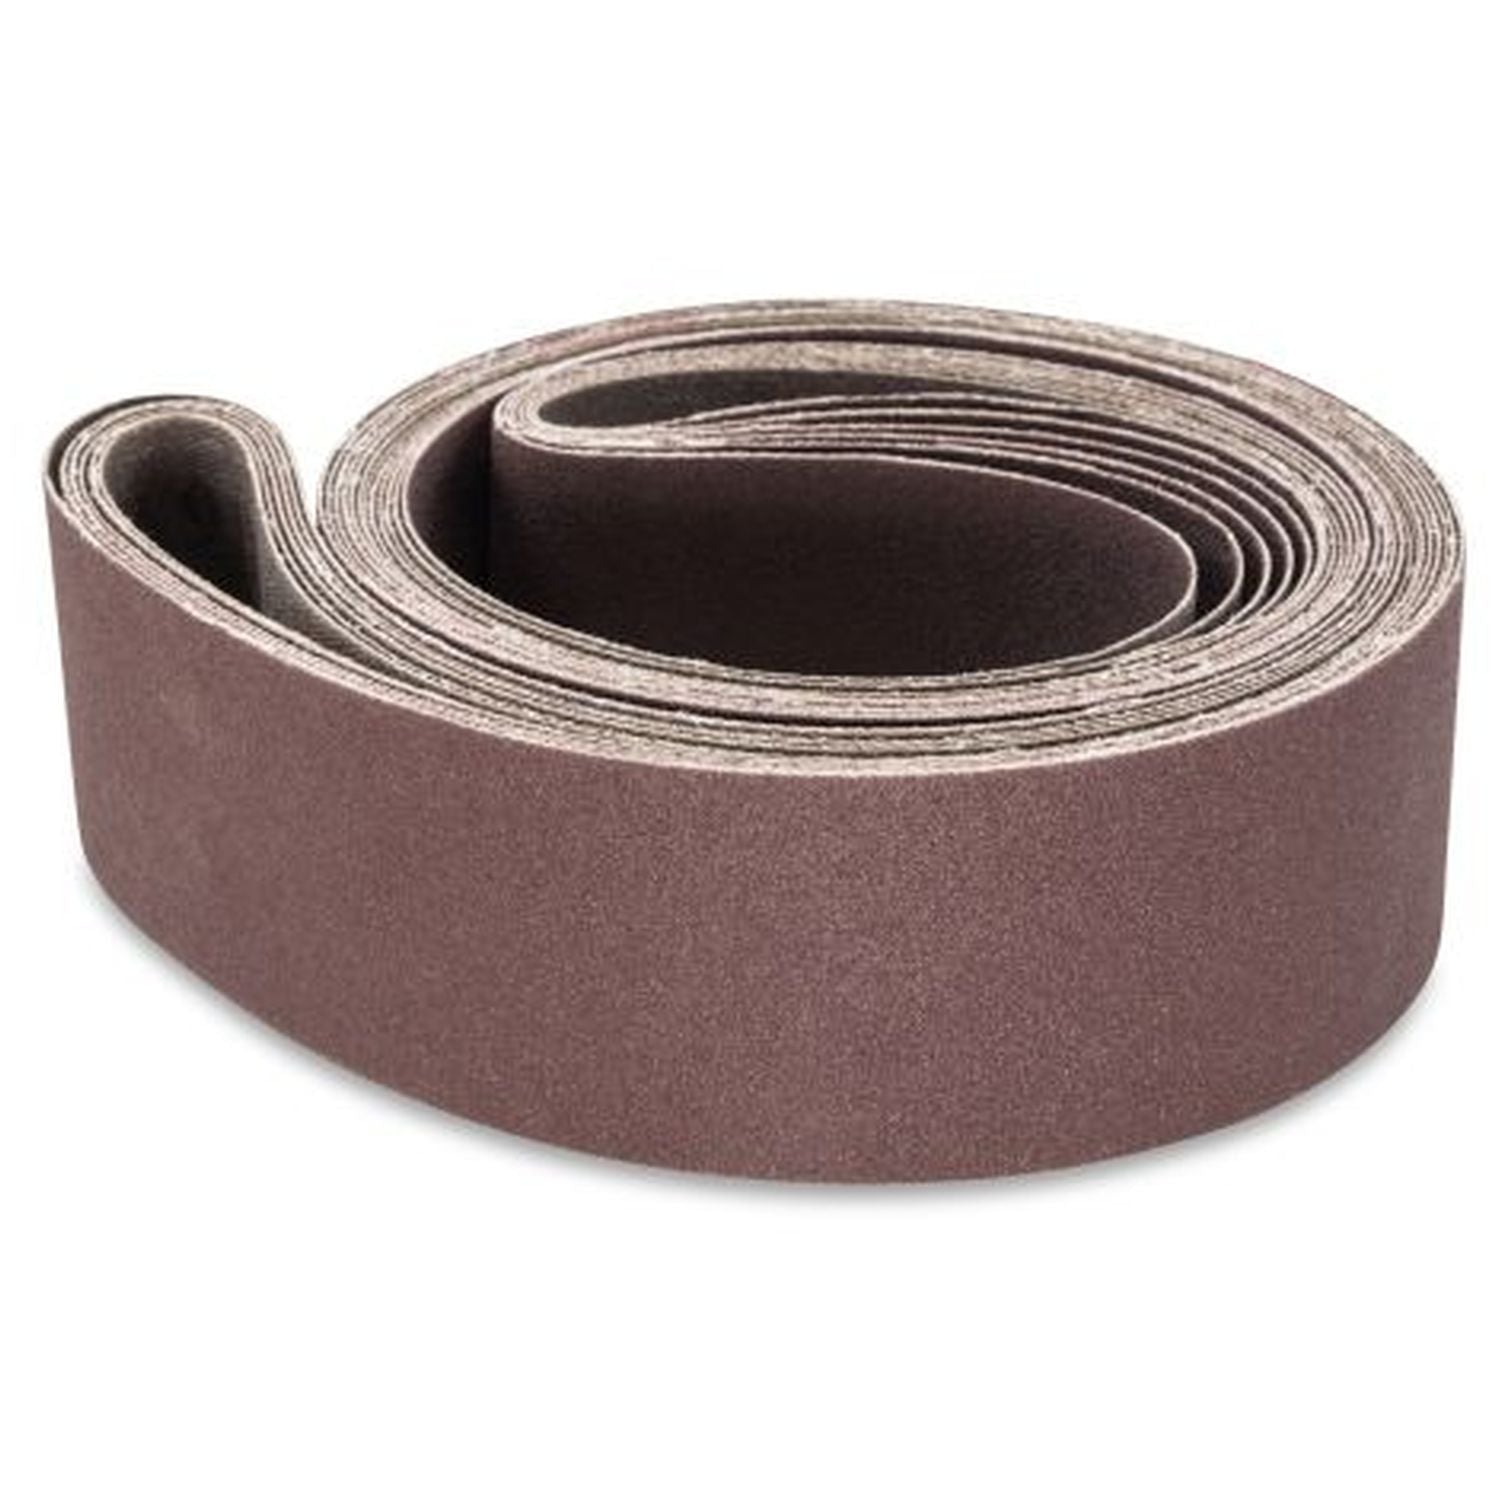 3 X 79 Inch Aluminum Oxide Metalworking Sanding Belts, 4 Pack - Red Label Abrasives